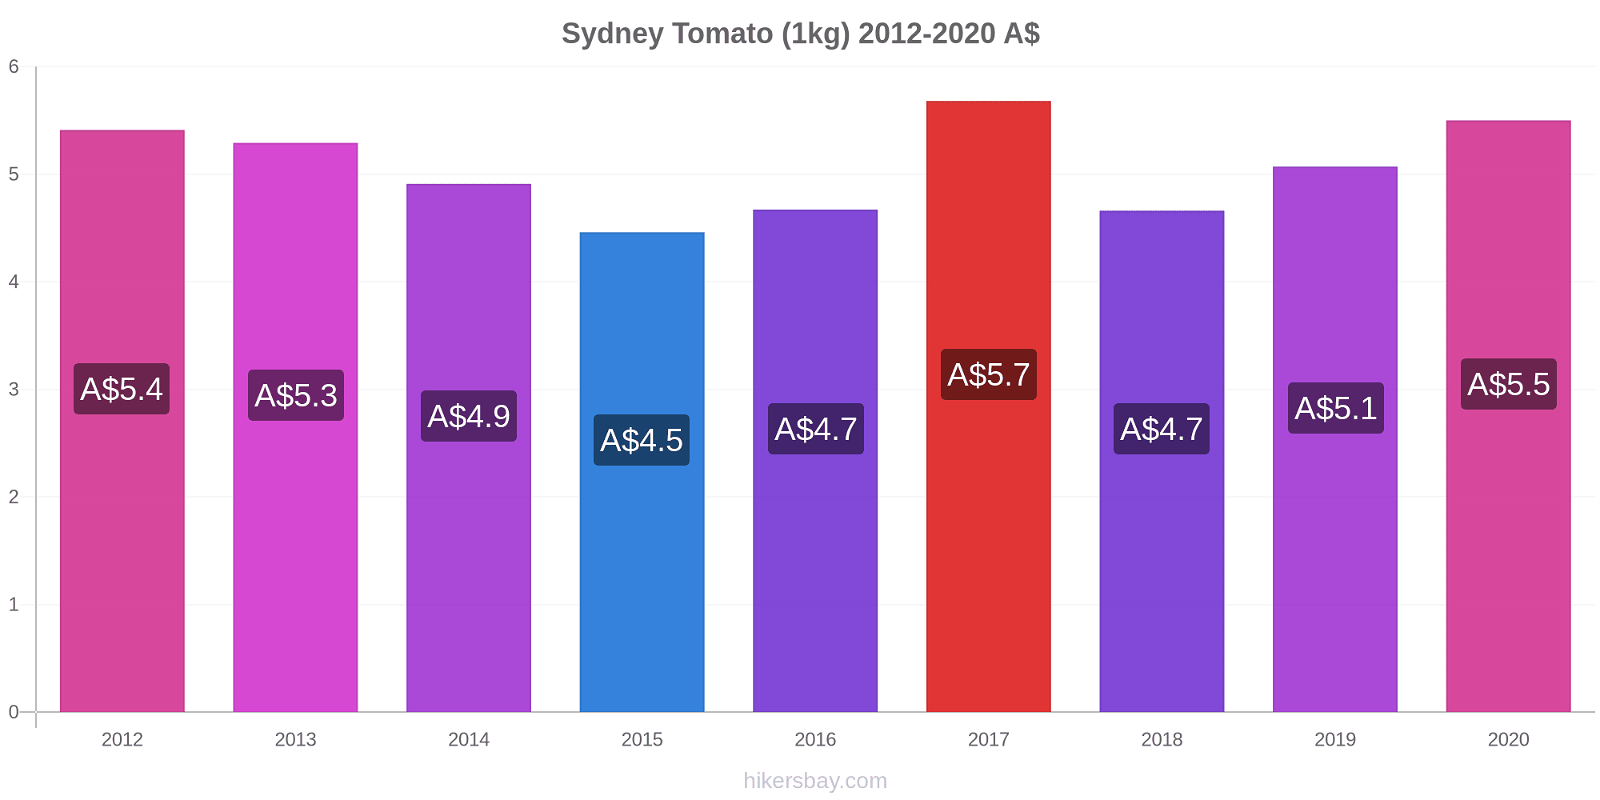 Sydney price changes Tomato (1kg) hikersbay.com